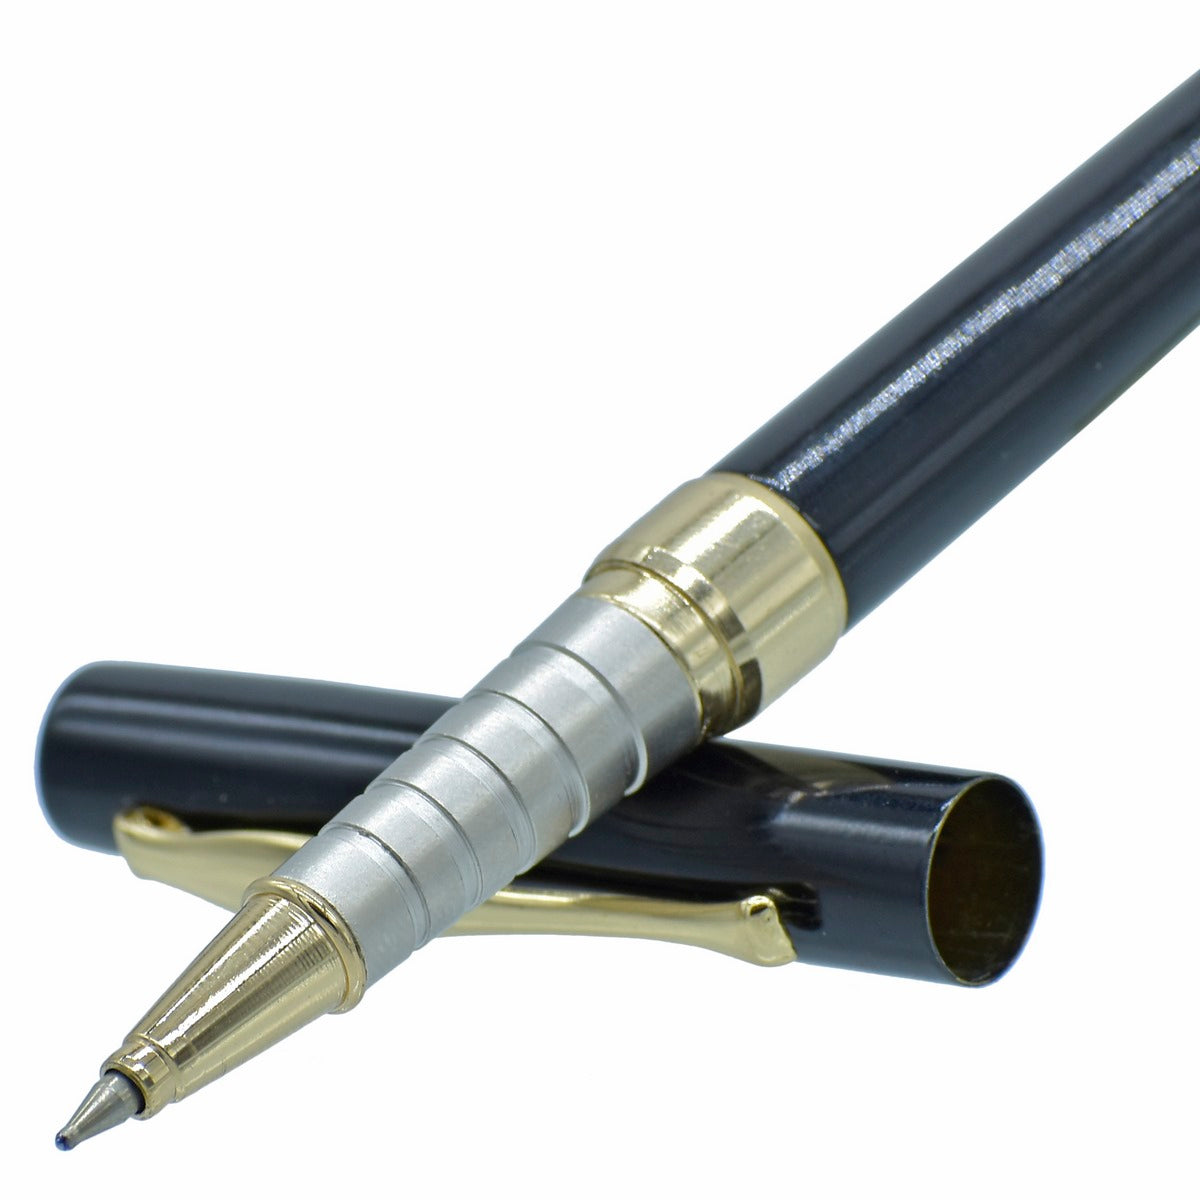 Unique Black Color Ball Pen with Golden Clip - For Office, College, Personal Use - JAI10BPBKGC